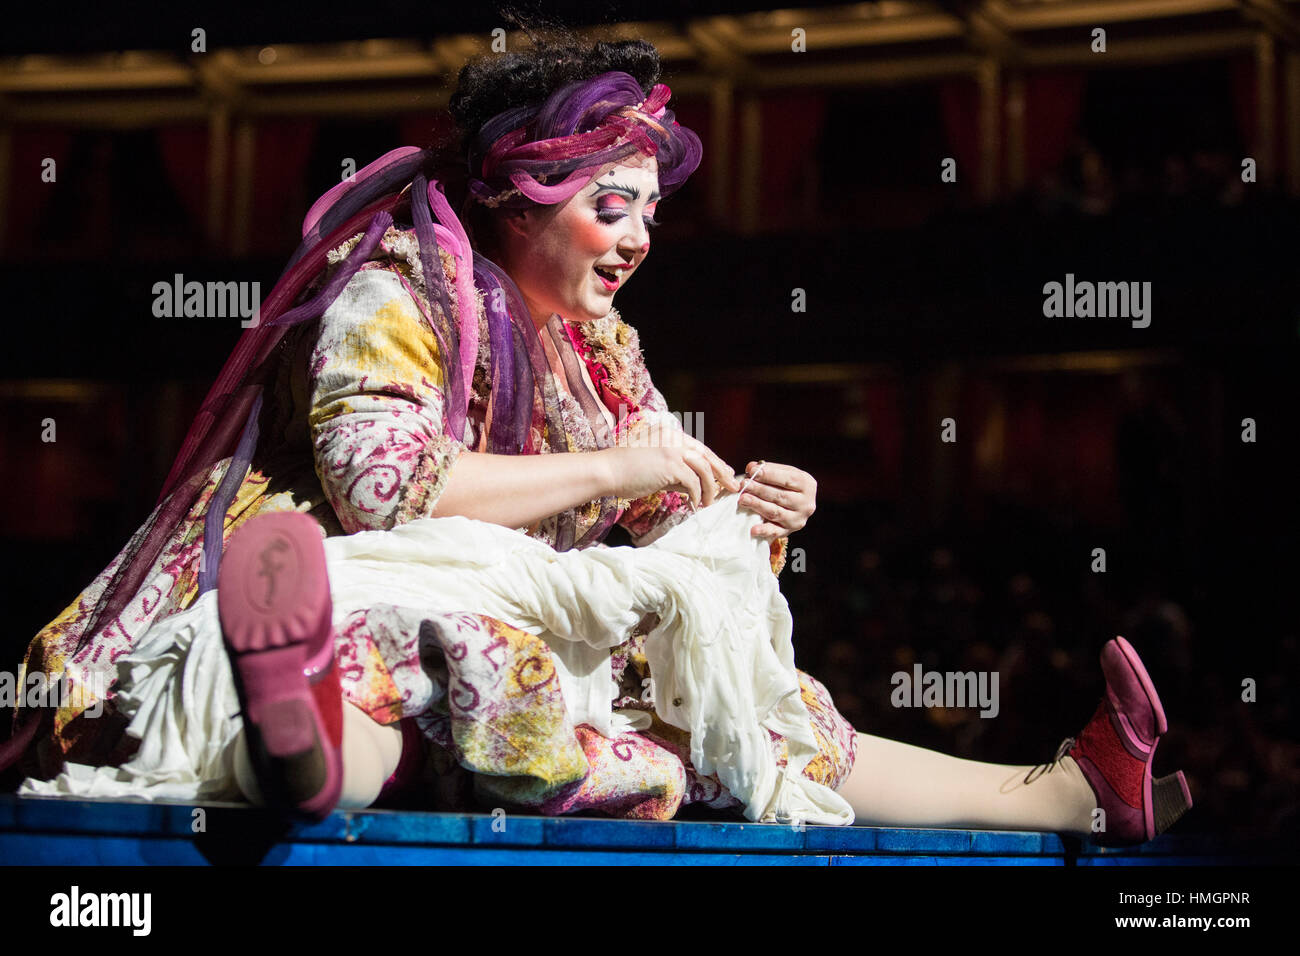 London, UK. 11 January 2016. Clown Mainha, Gabriella Argento. Dress rehearsal of Cirque du Soleil's show Amaluna at the Royal Albert Hall. Shows run from 12 January to 26 February 2017. Stock Photo